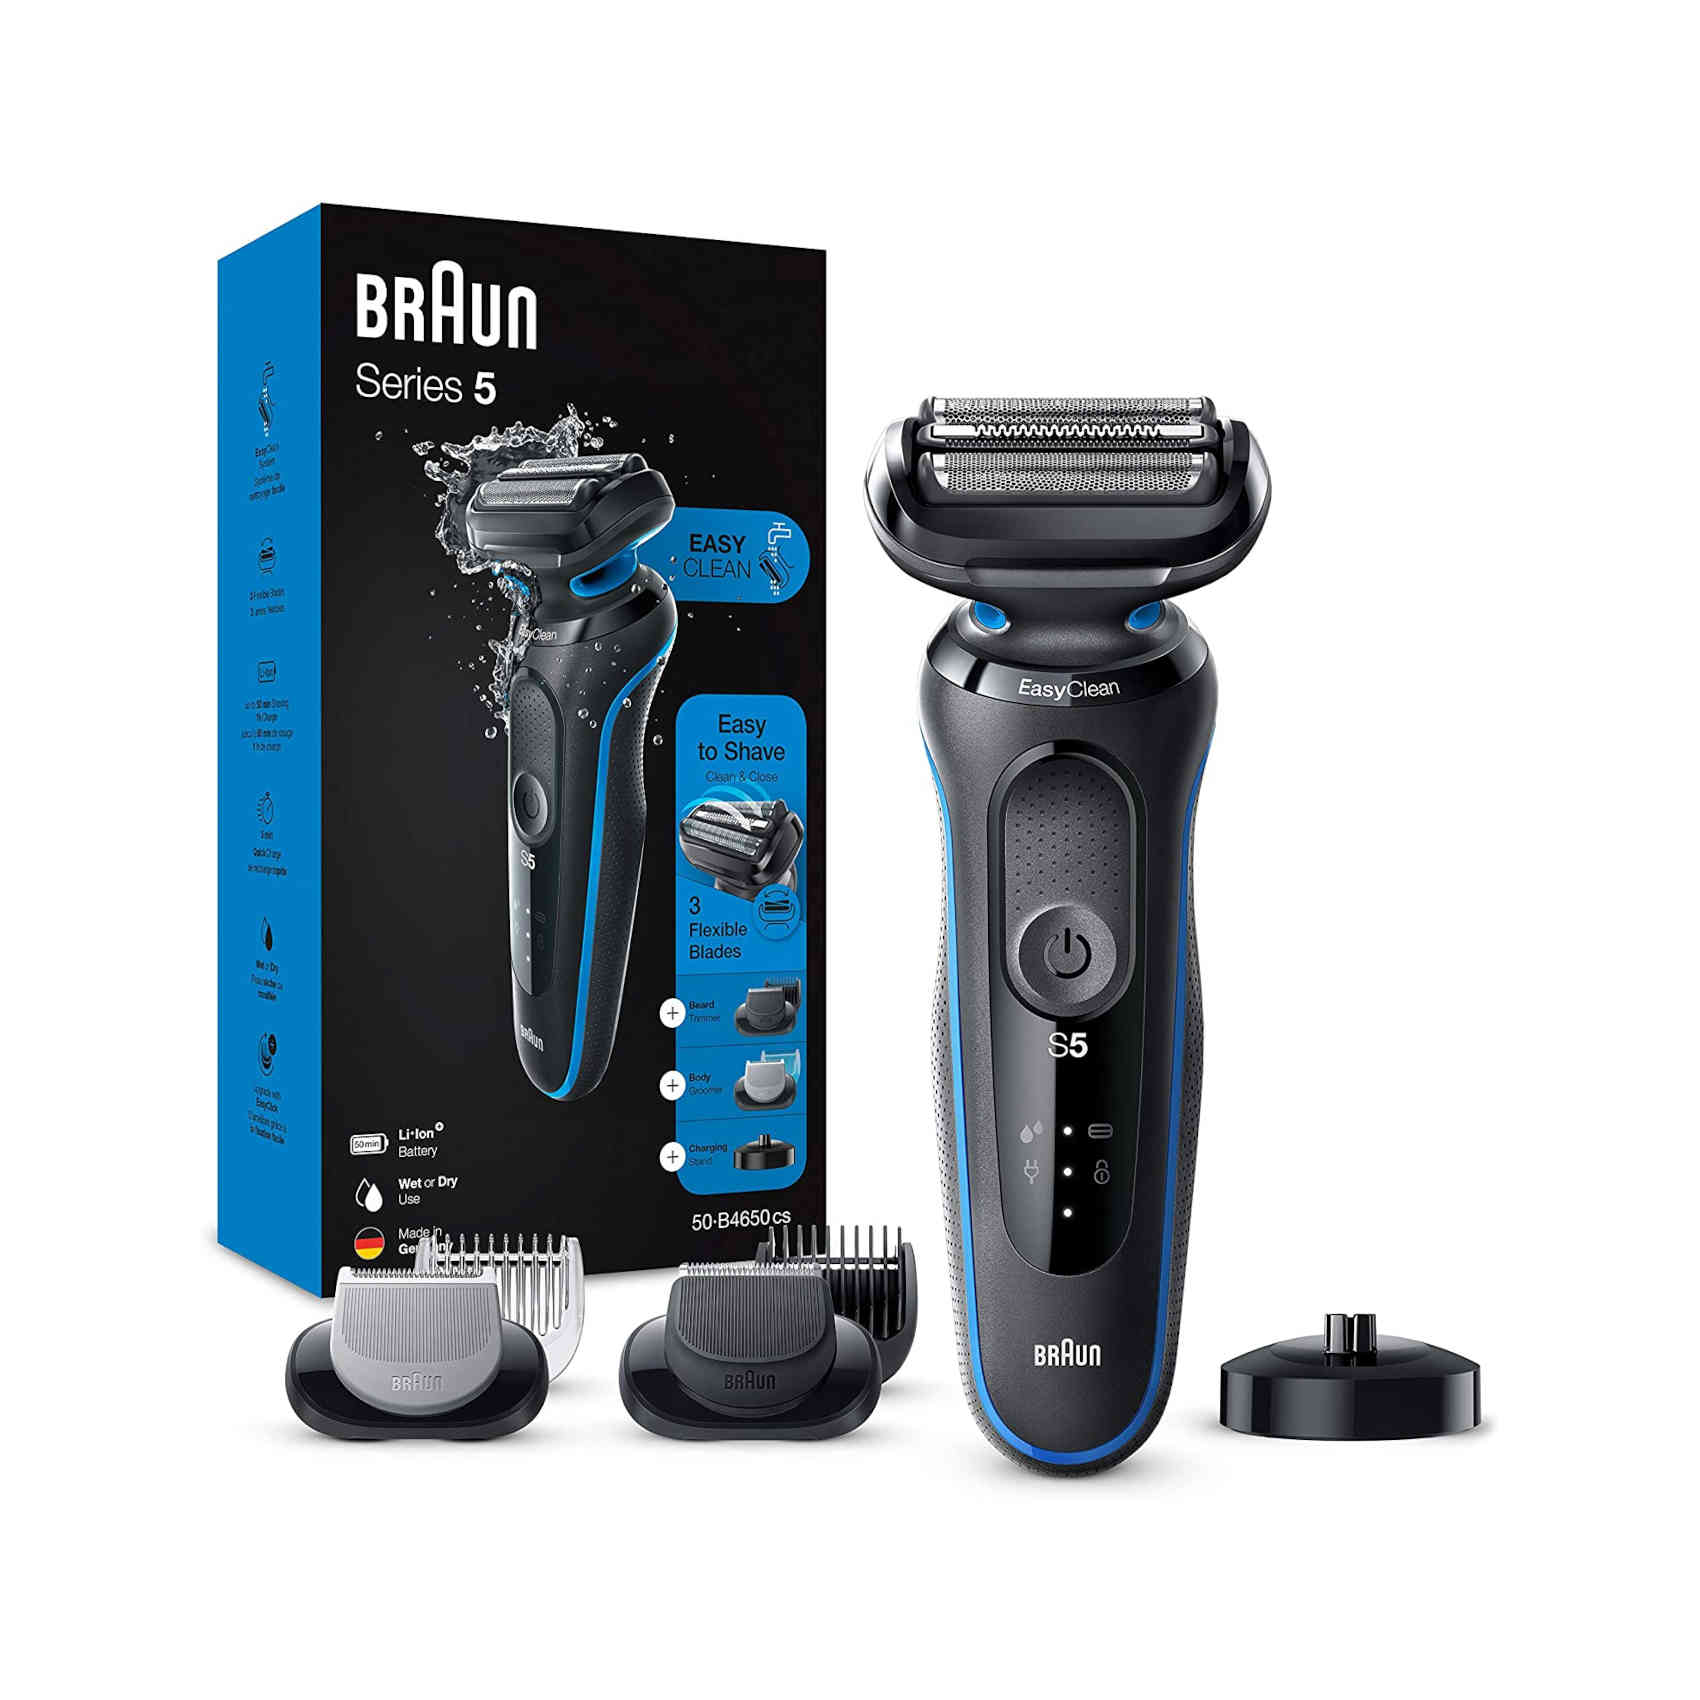 Braun Series 5 50-b4650cs Rasoio Elettrico Barba Accessori Inclusi Uso Wet&dry